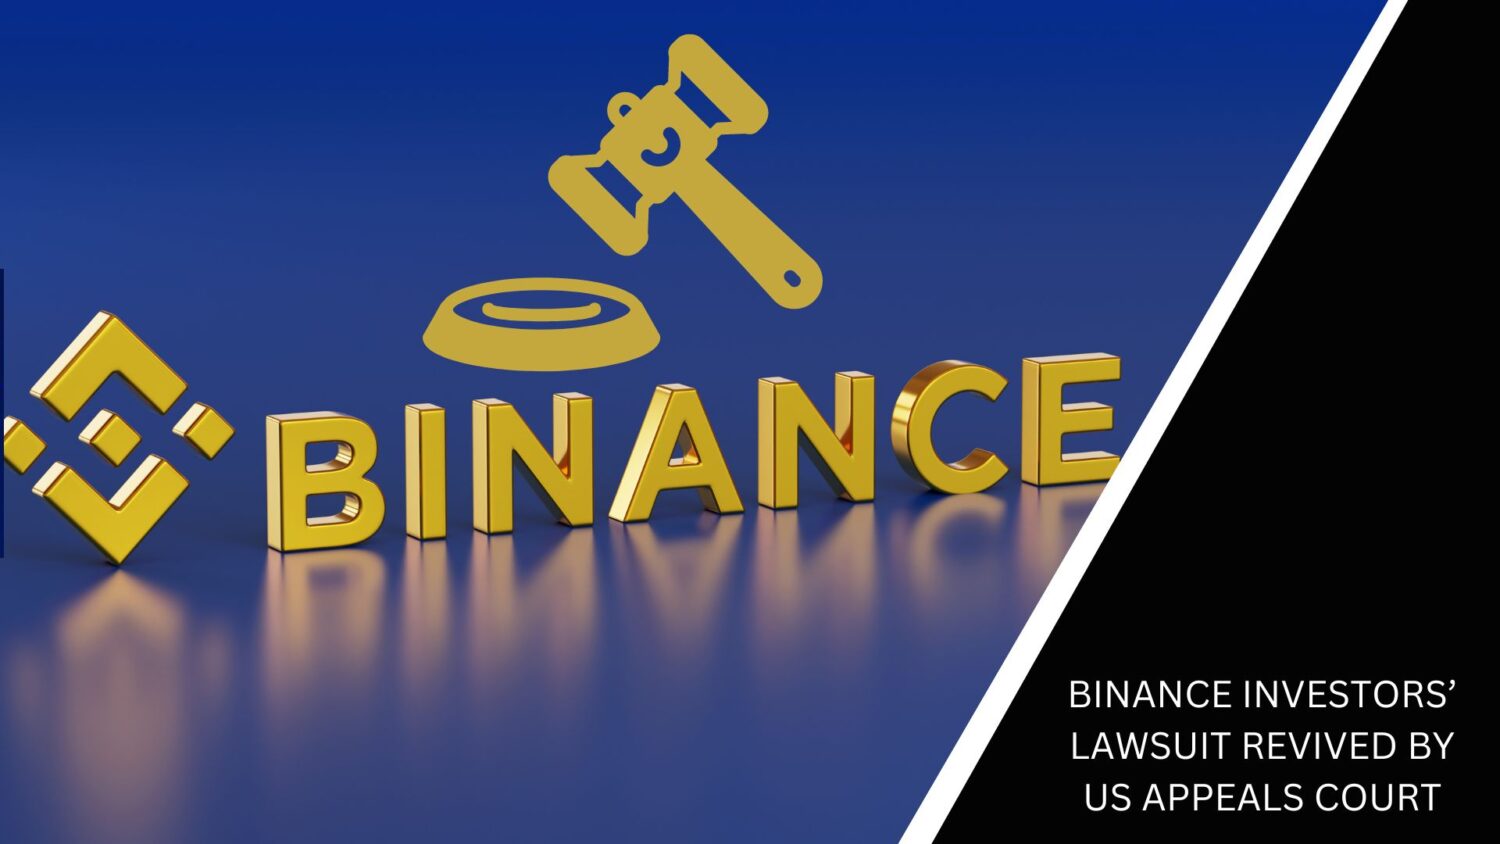 Binance Investors’ Lawsuit Revived By Us Appeals Court